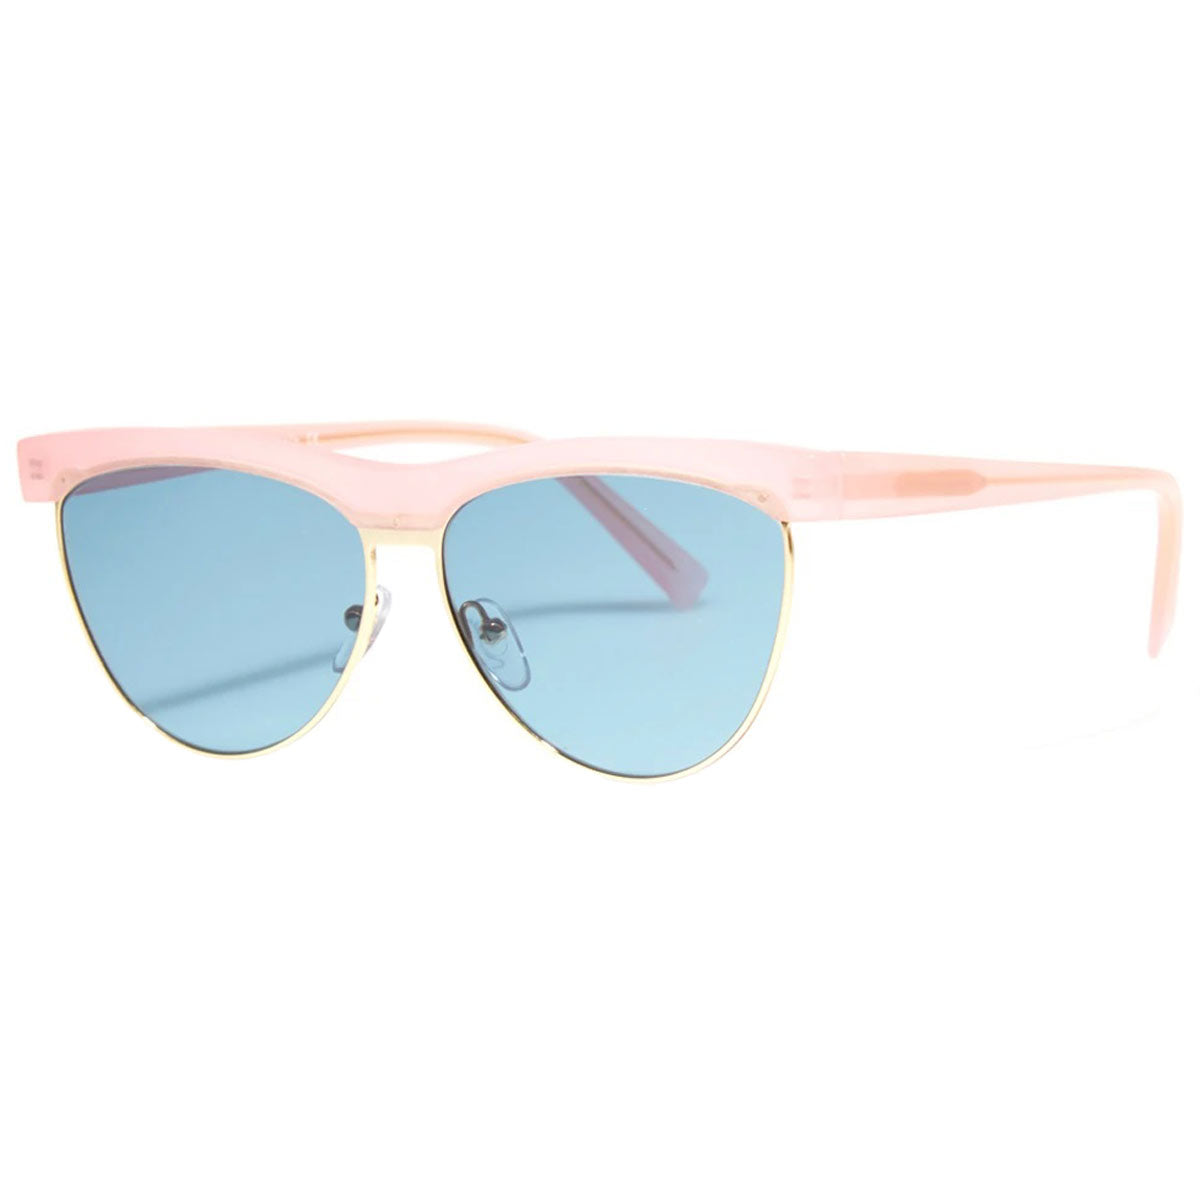 Bob Sdrunk Women's Sunglasses - Lizzie Pink and Gold Frame / LIZZIE-73-LB-57-14-145